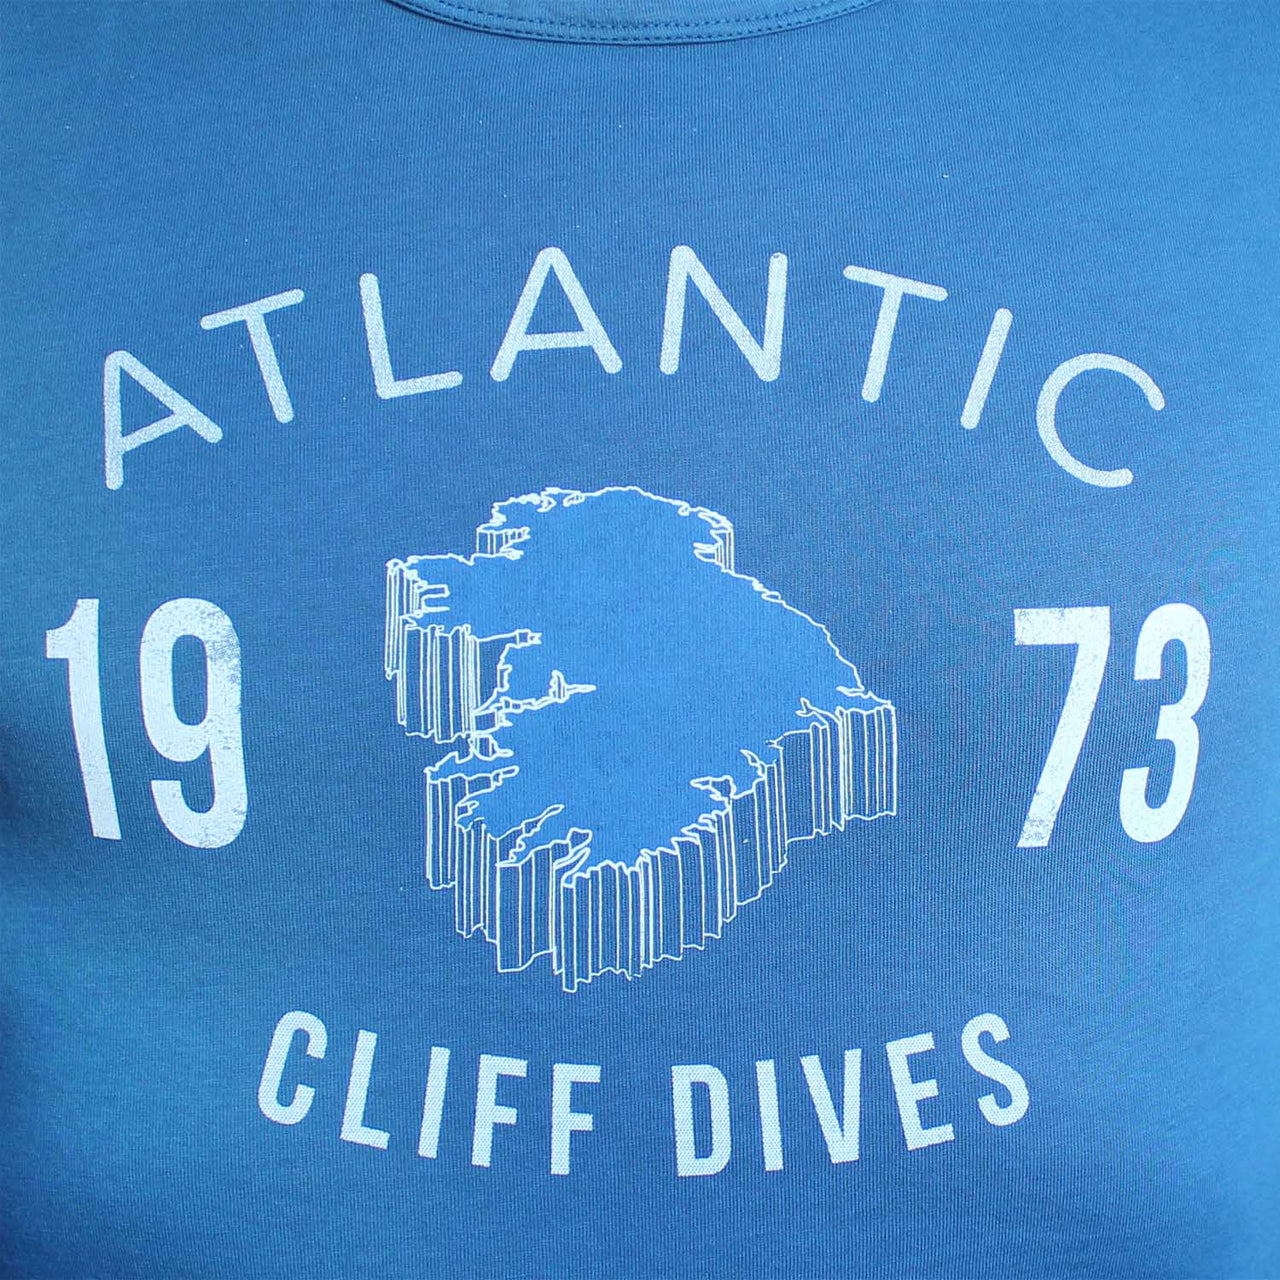 Ladies Cliff Dives Tee - Blue